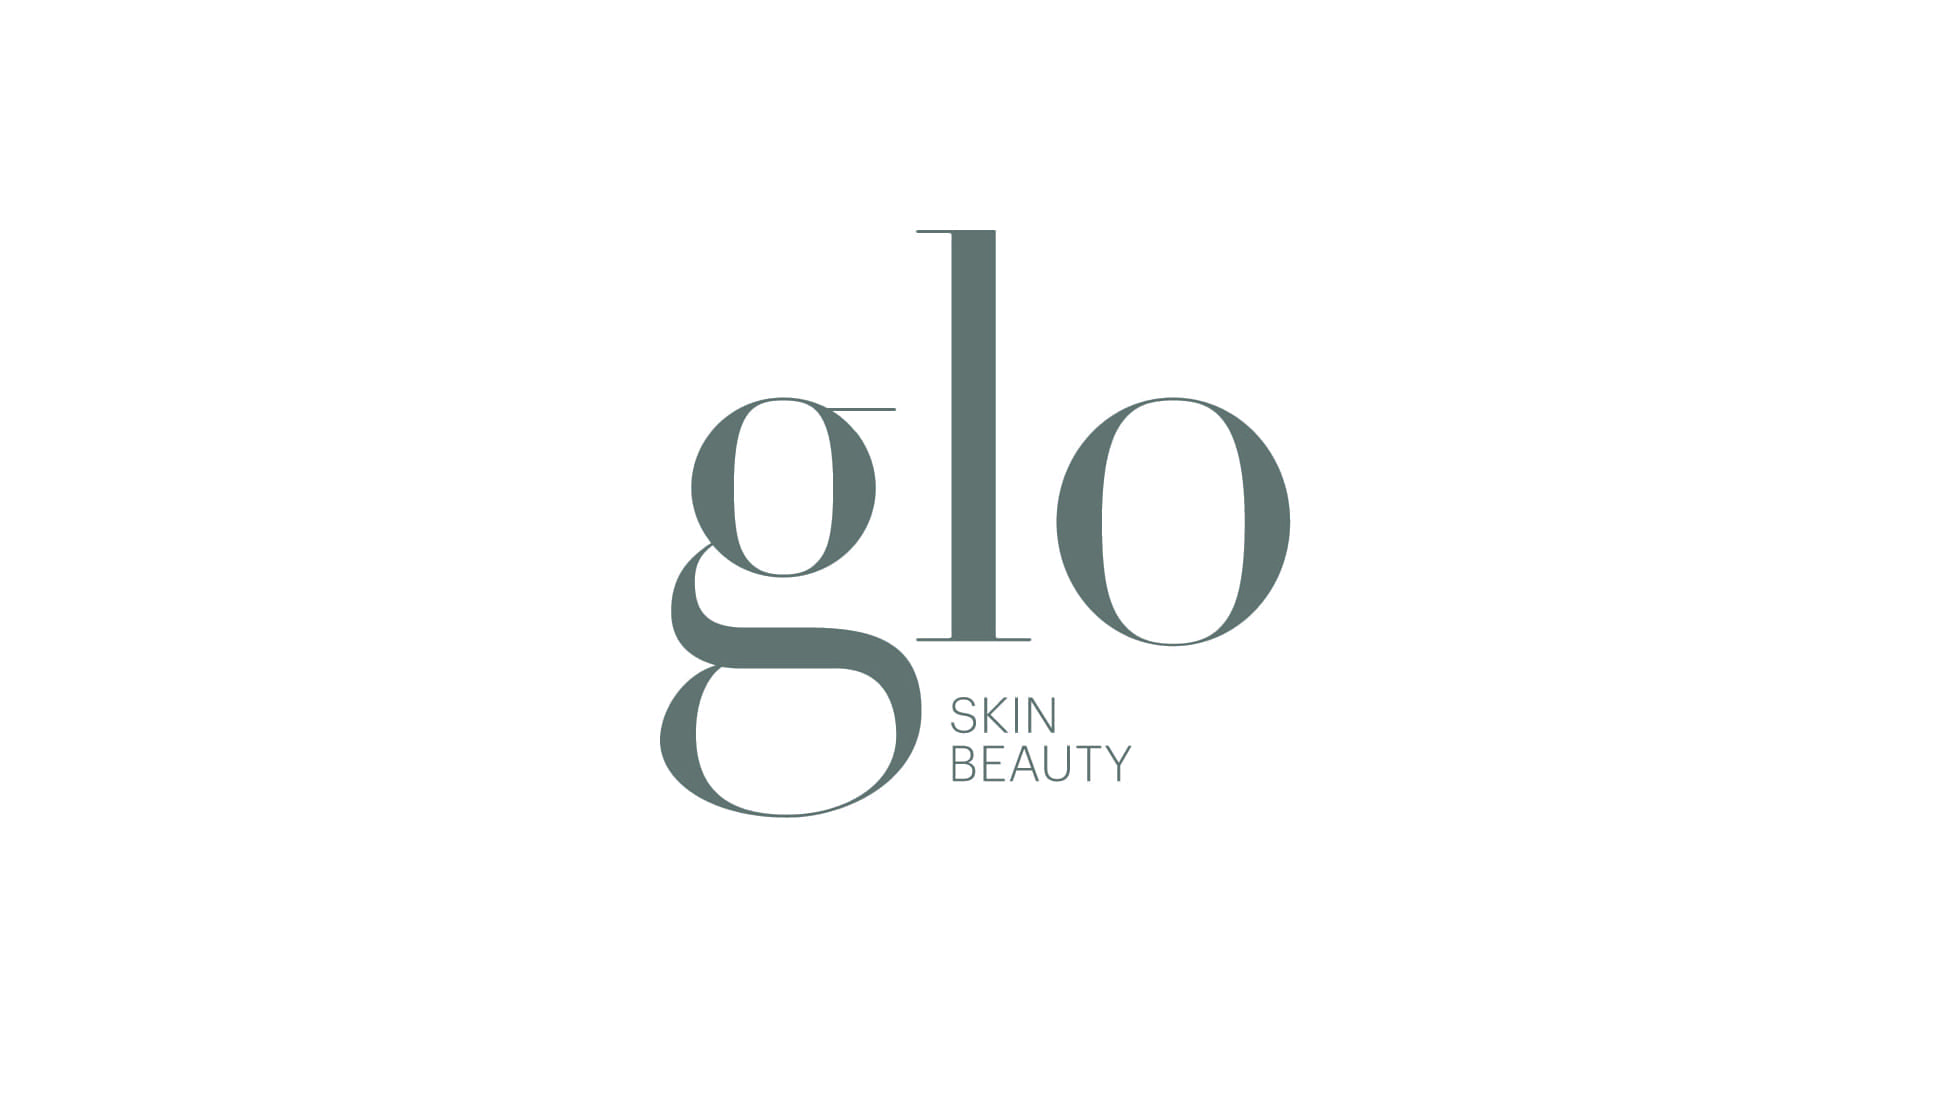 glo skin logo